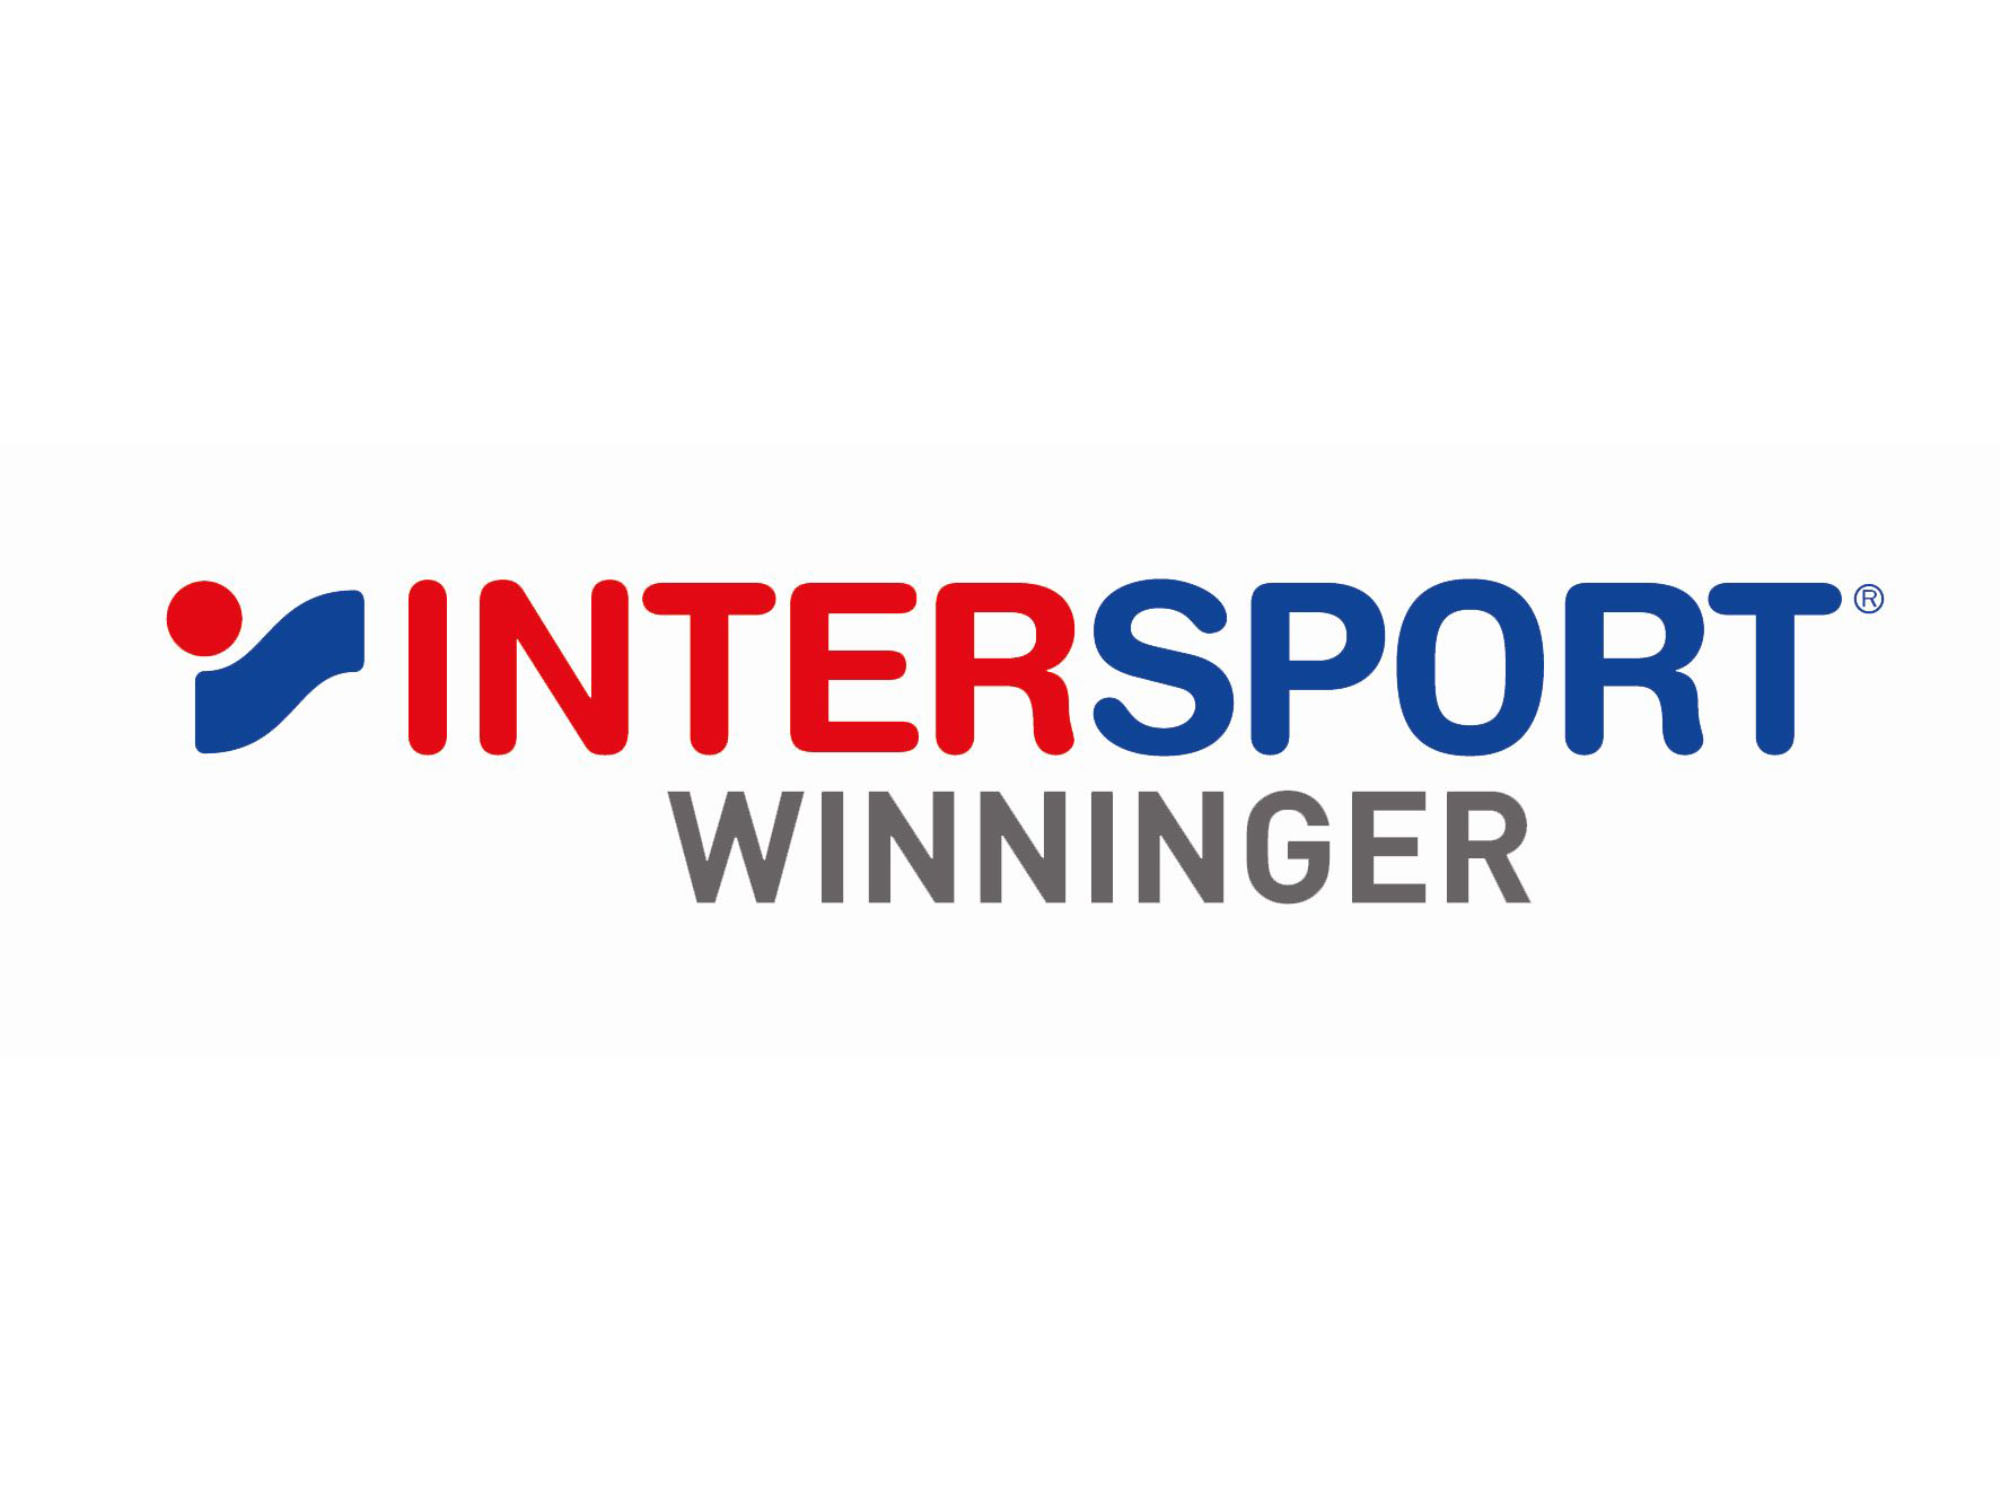 Intersport Winninger